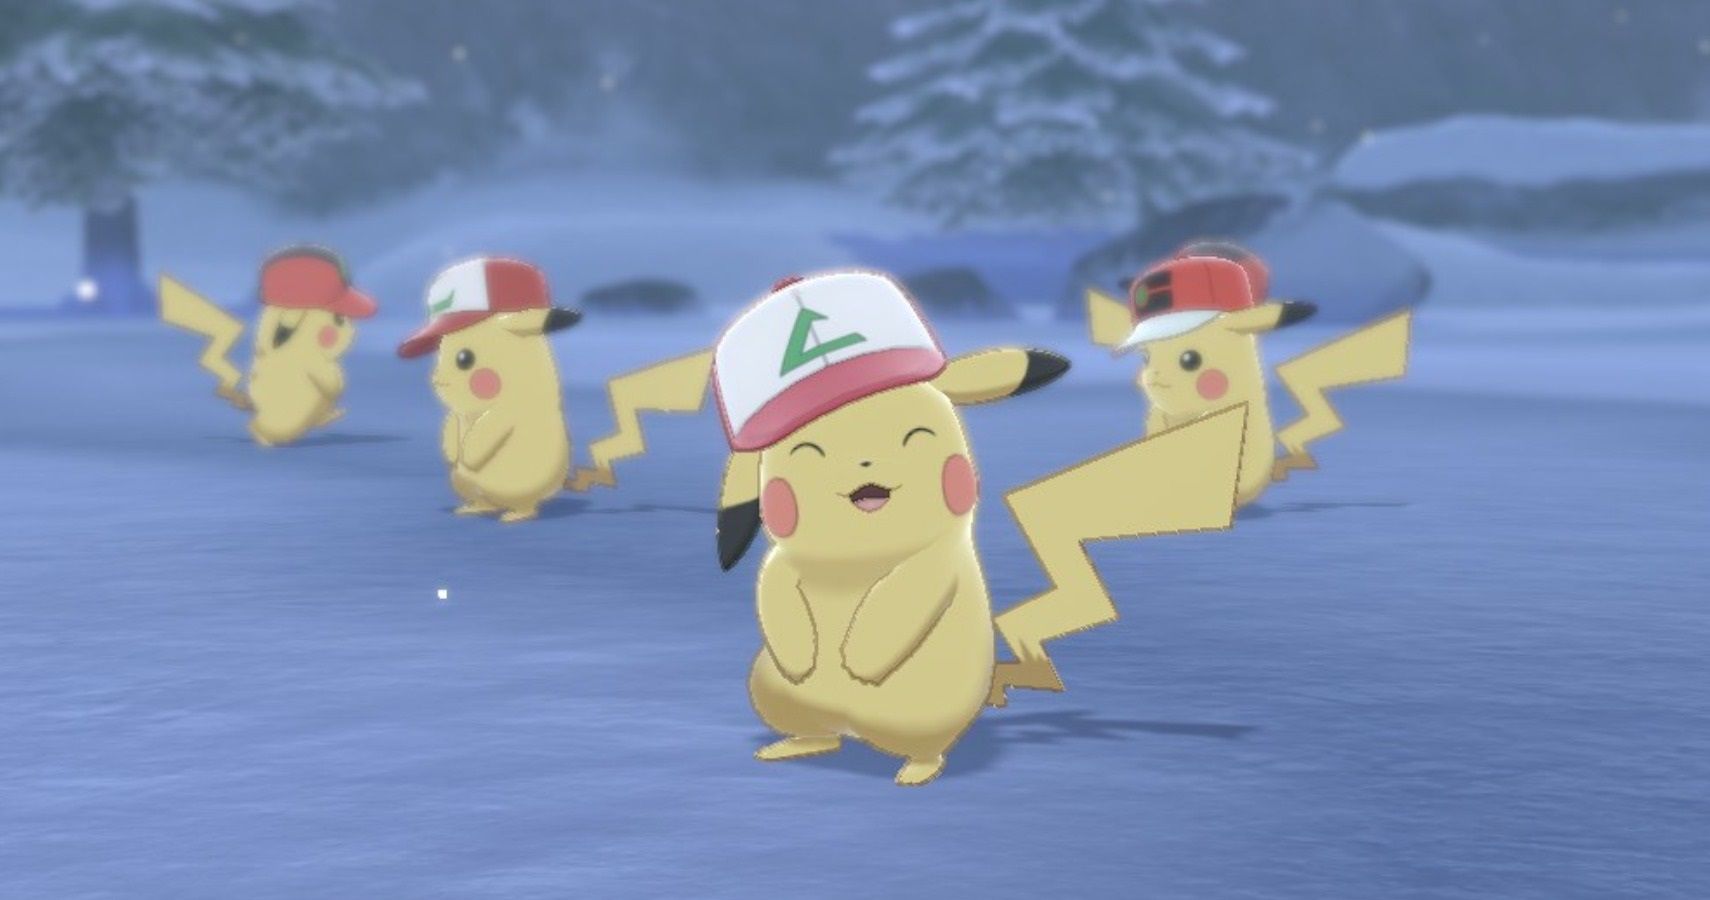 Get Ash's Pikachu Wearing Ash's Caps in Pokémon Sword or Pokémon